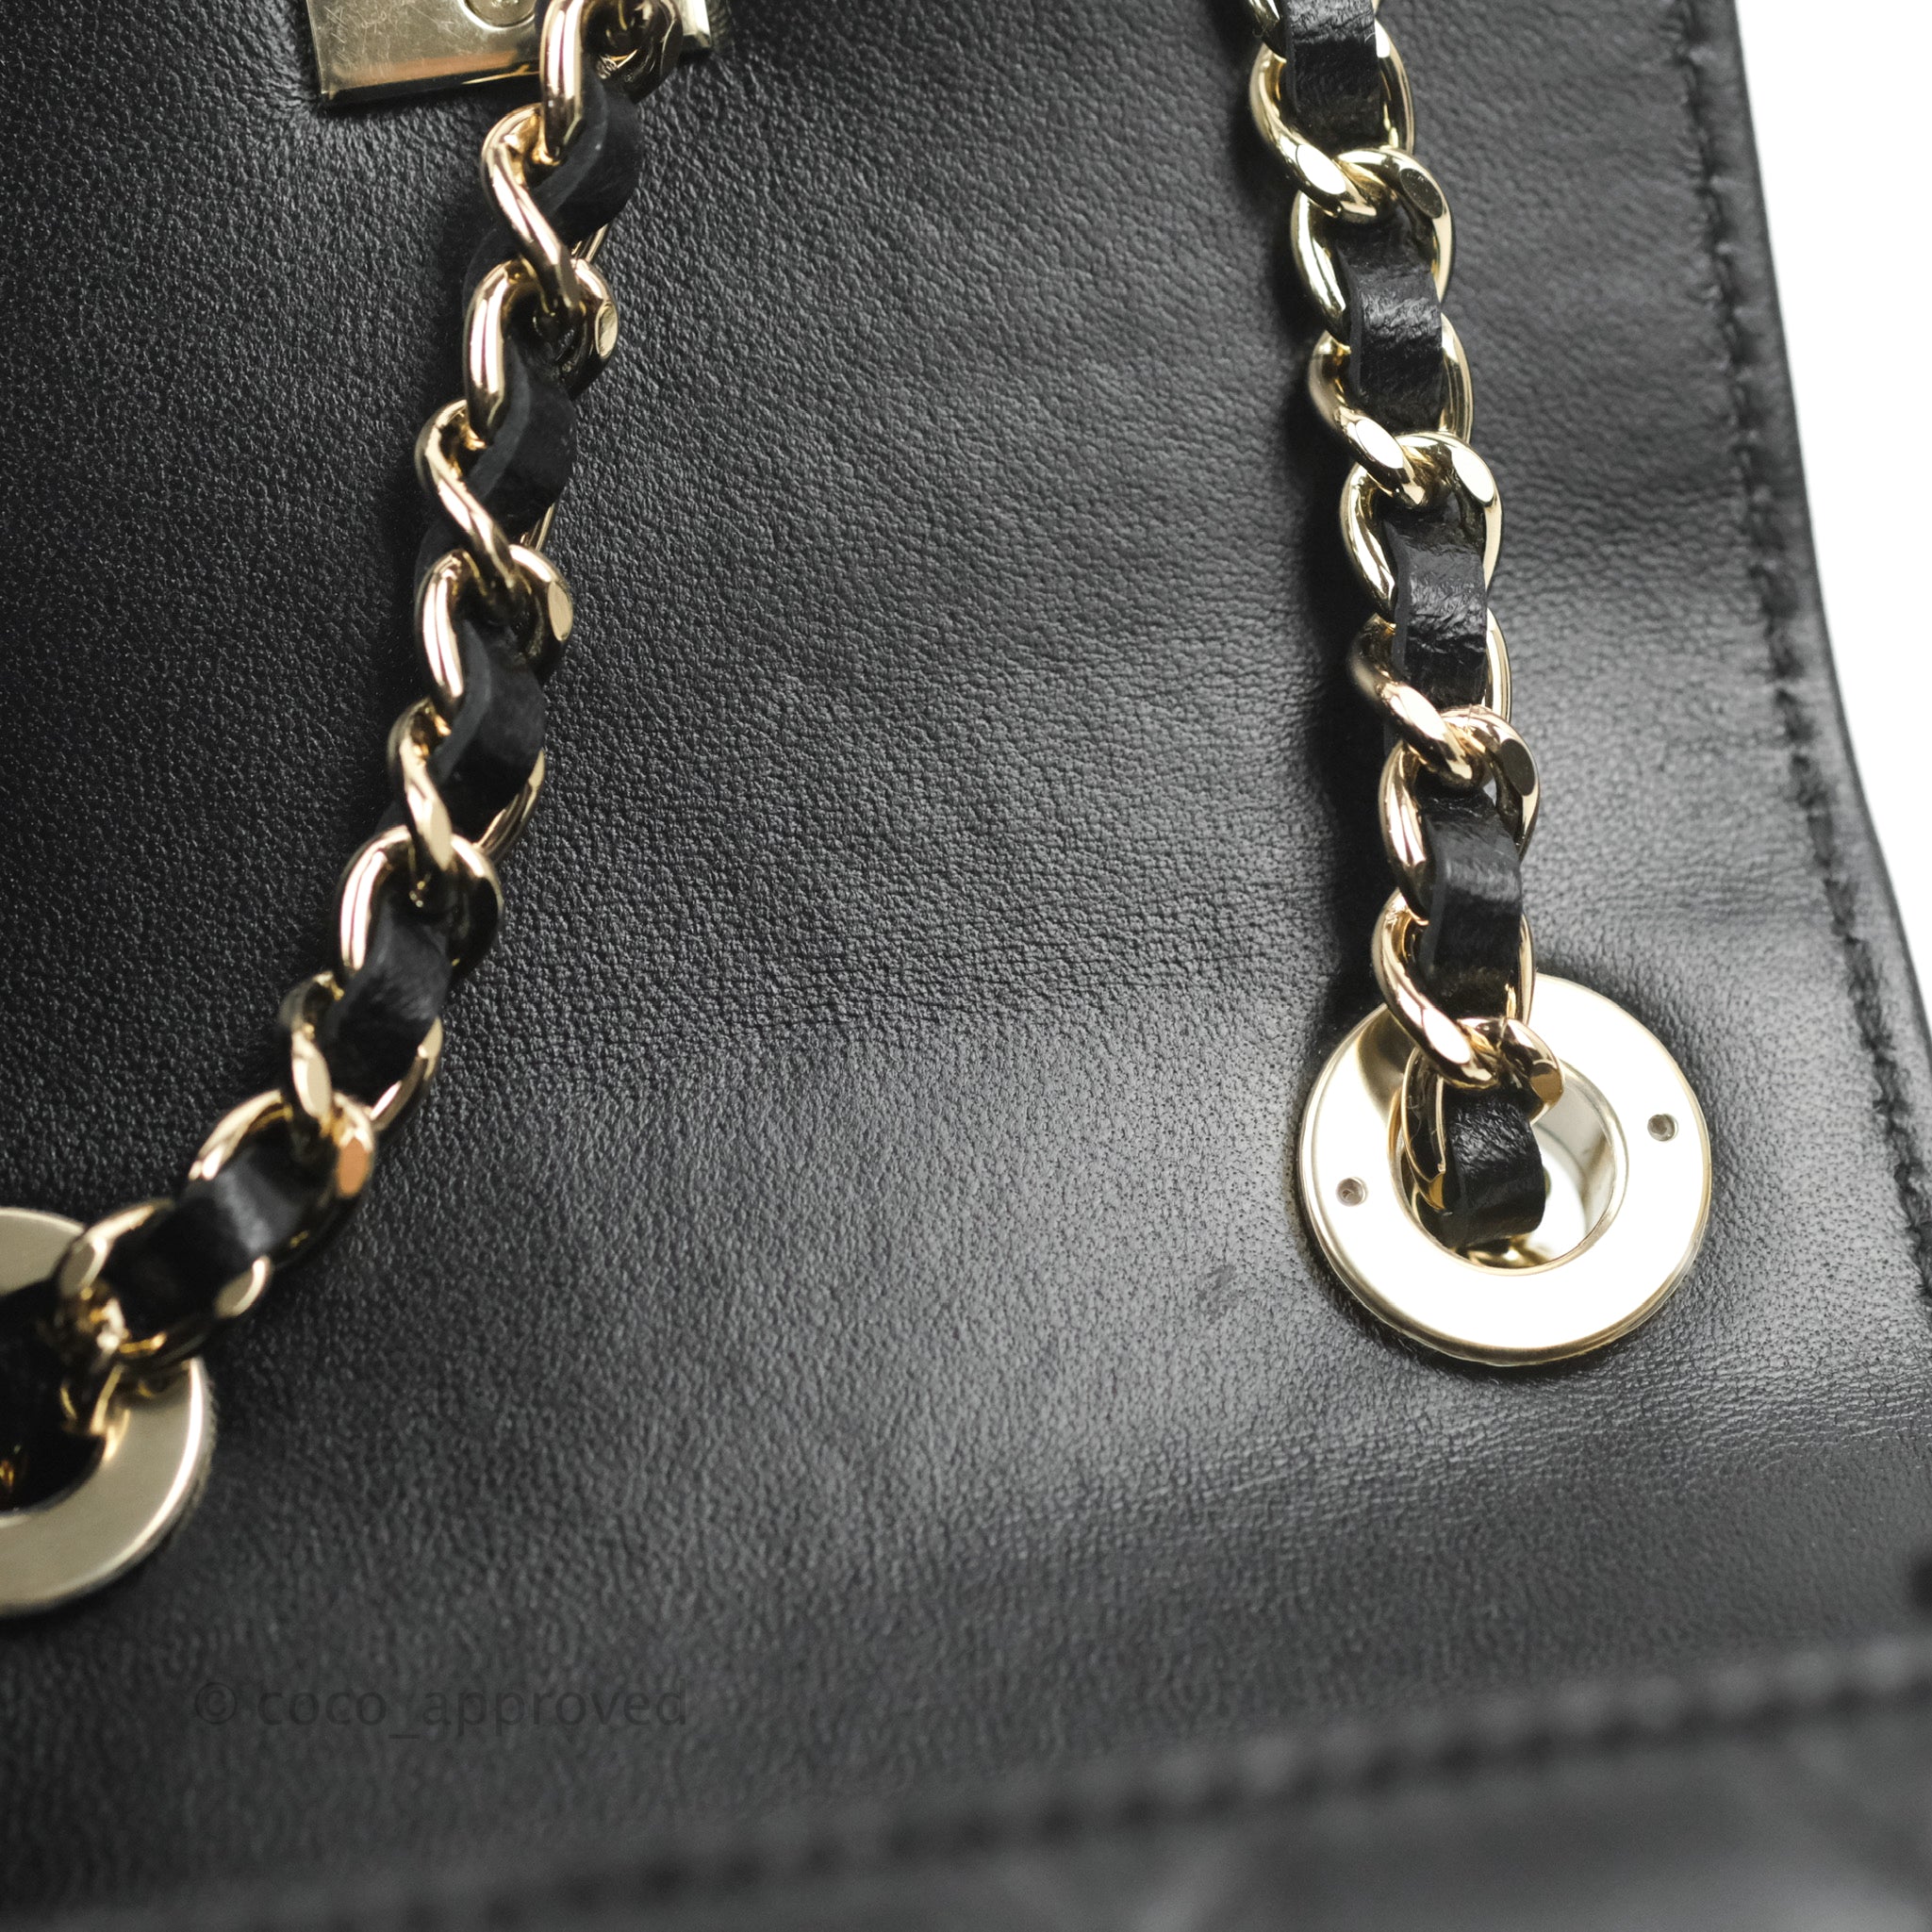 Chanel Coco Crush Mini Rectangular, Black Lambskin with Gold